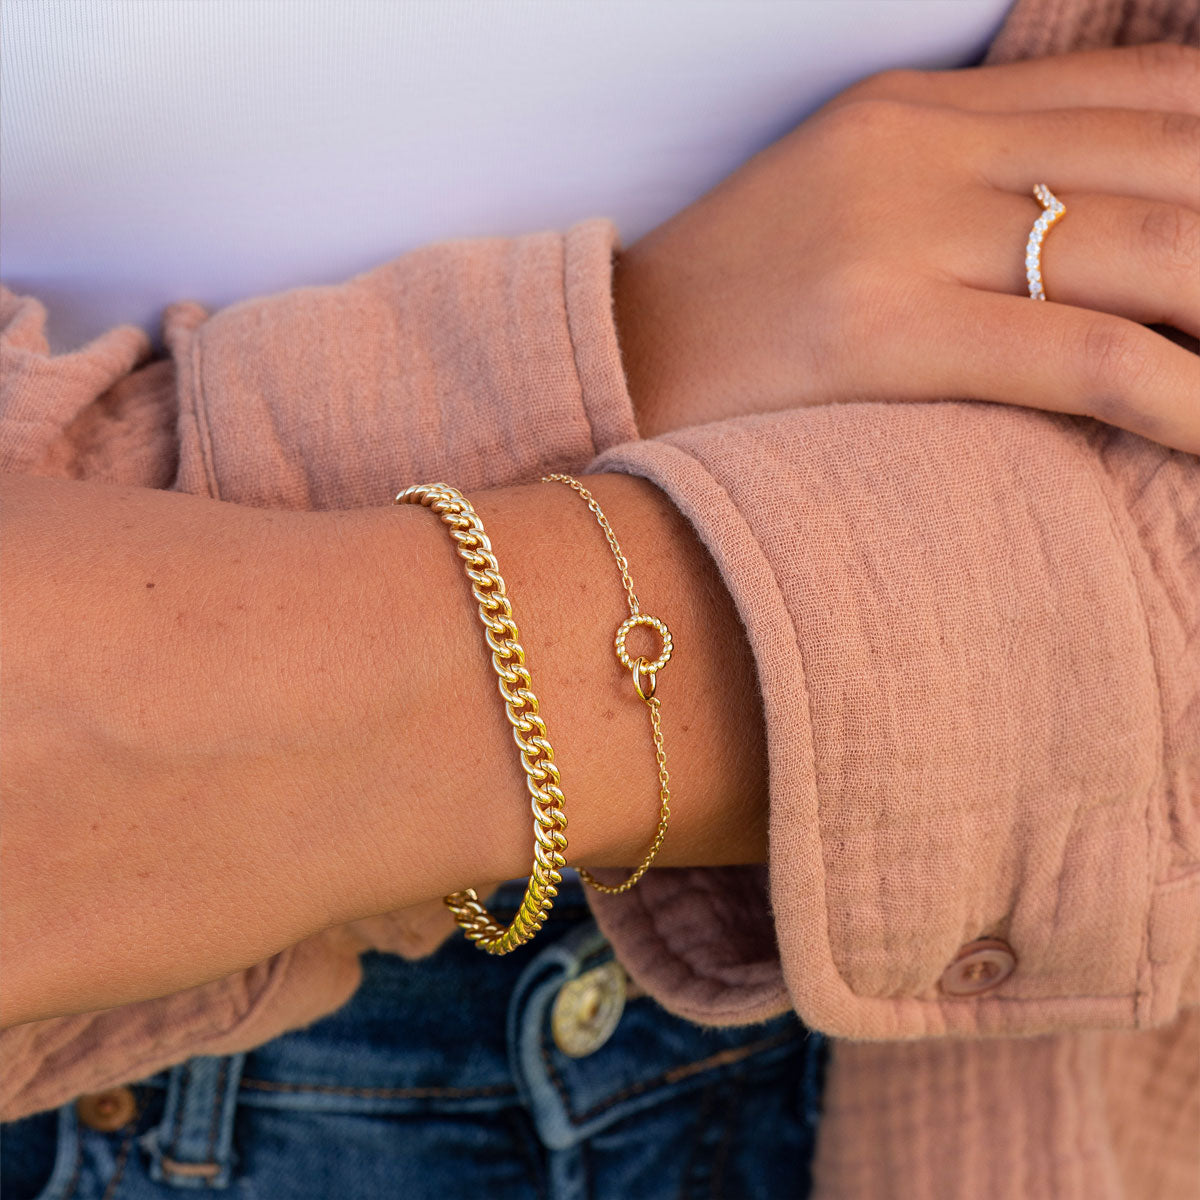 Cute gold layered chain bracelets